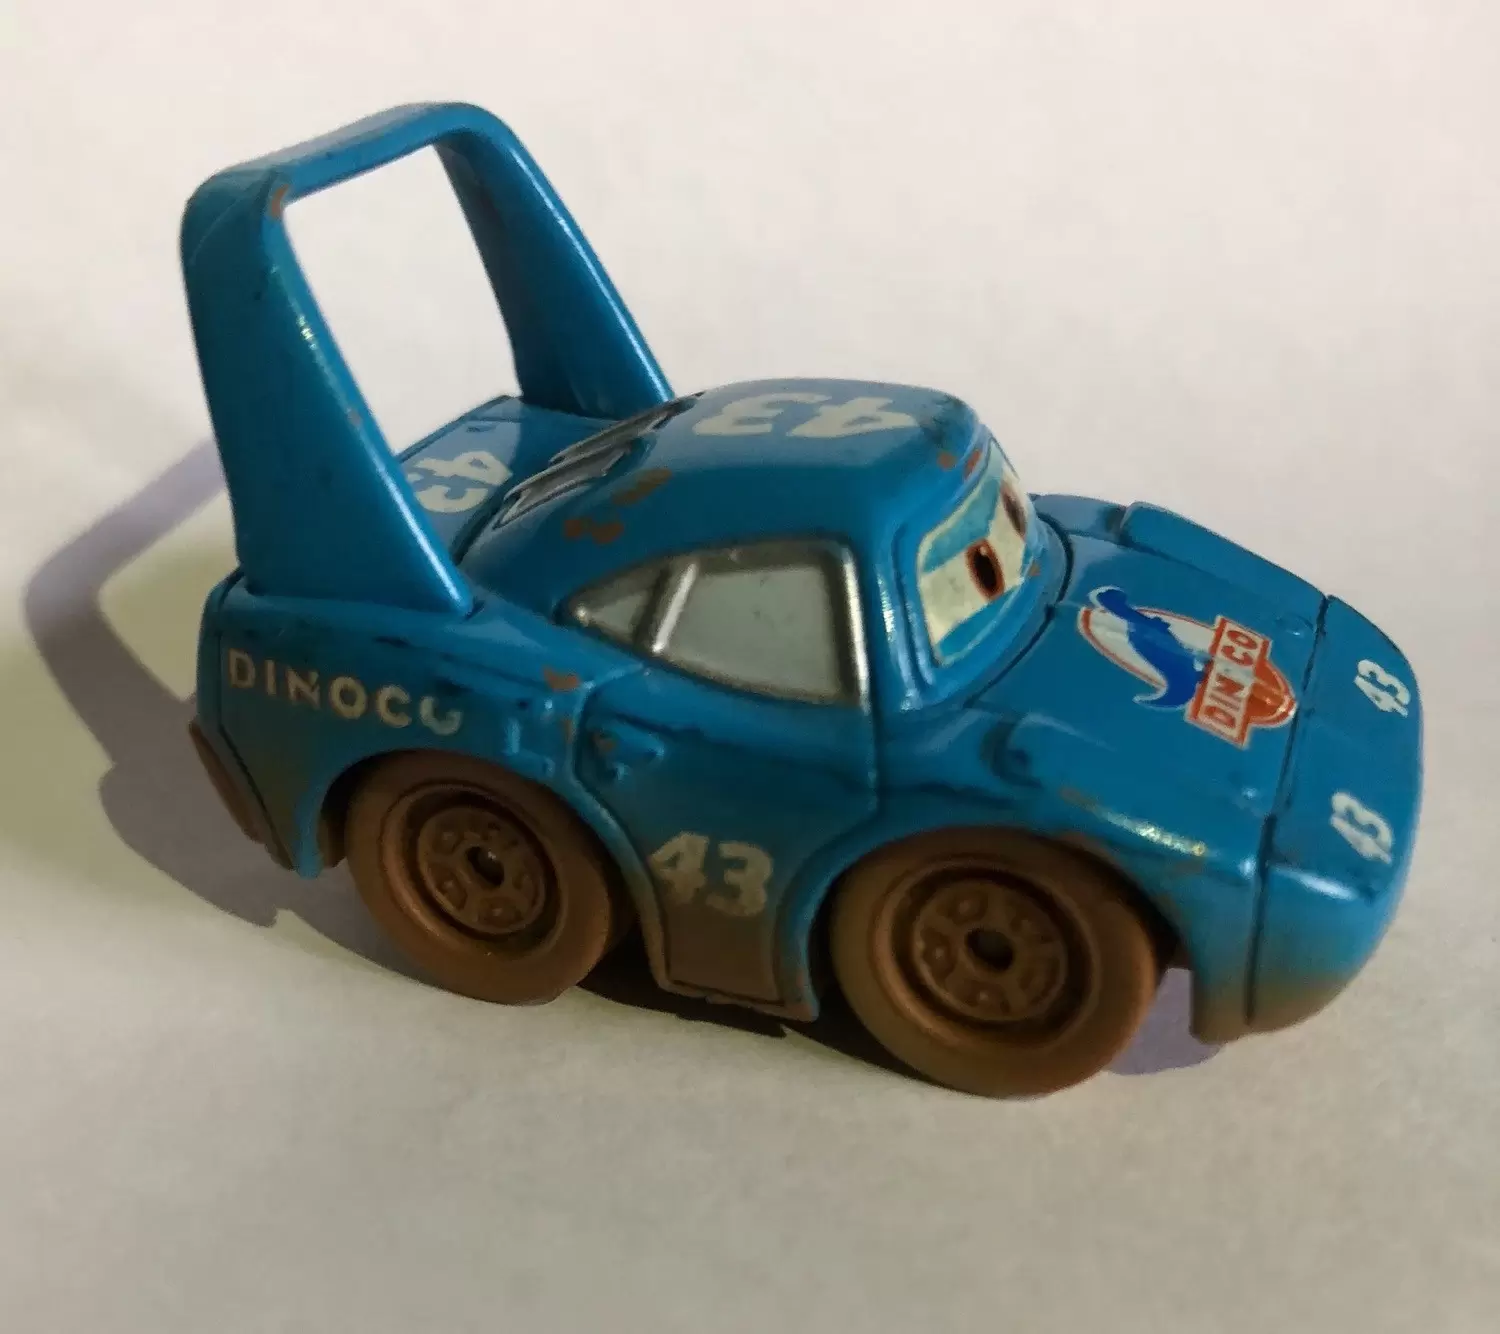 Mini Adventure cars - The King Dinoco Dream (variante poussiéreuse)